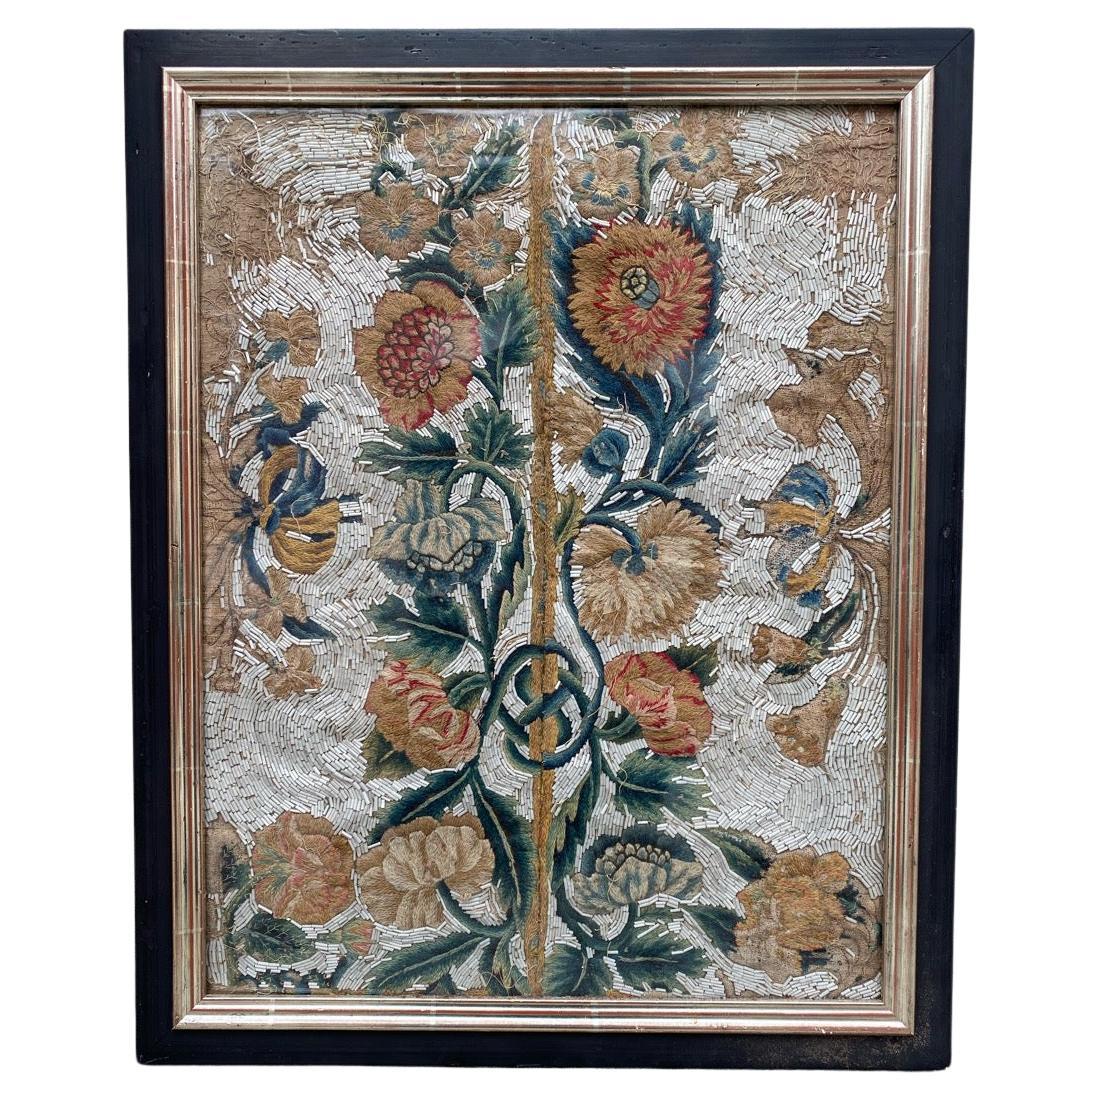 Antique European 17th Century Embroidery Fragment